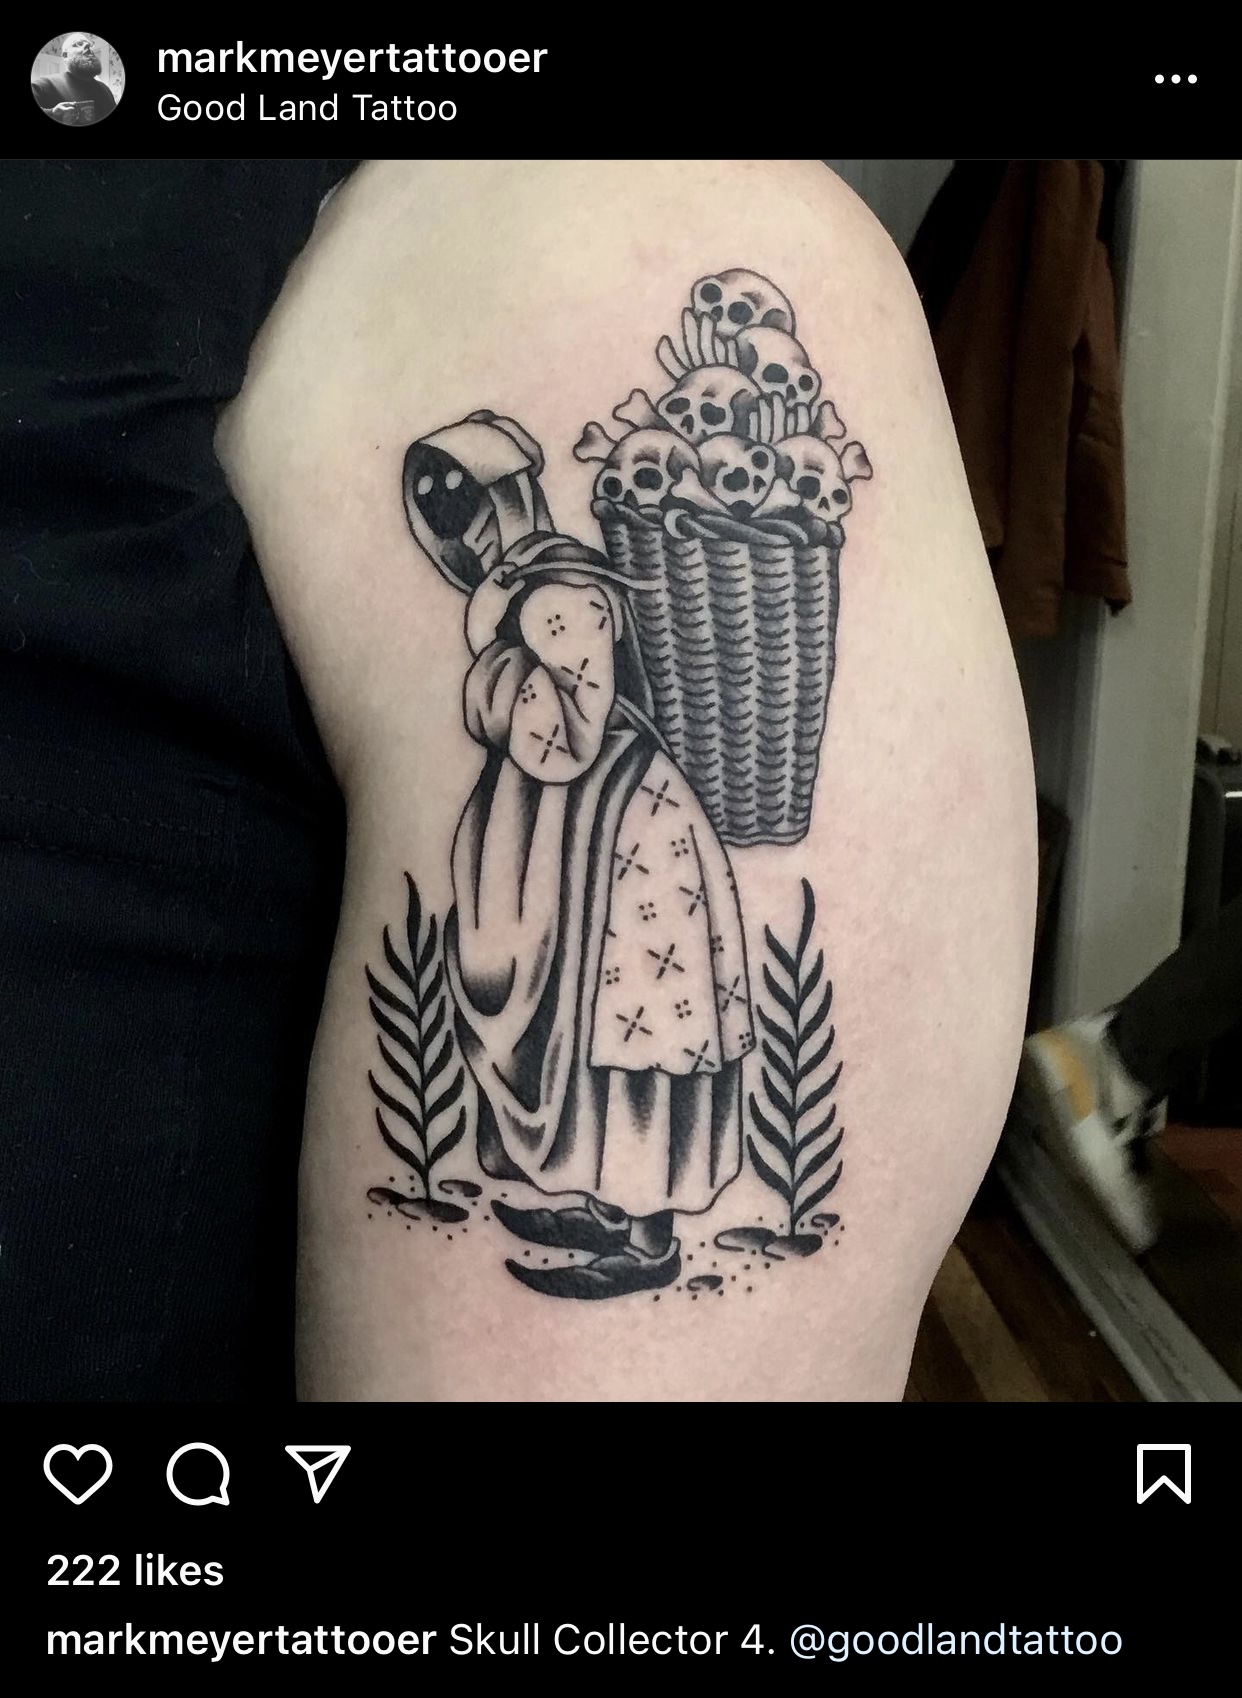 Mourning tattoo